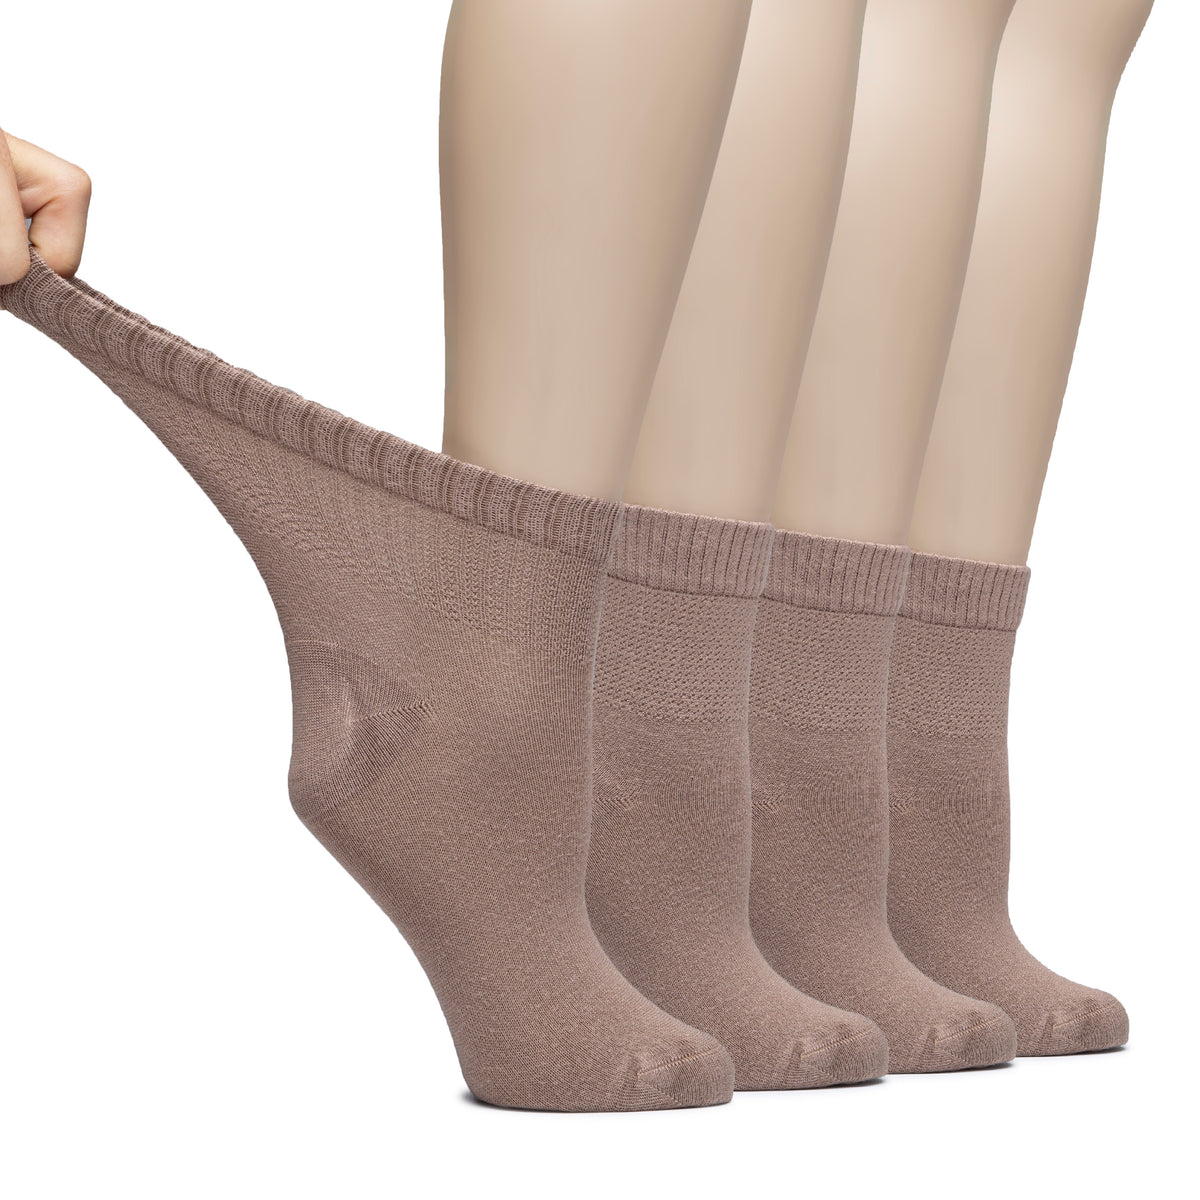 Hugh Ugoli Lightweight Women's Diabetic Ankle Socks Bamboo Thin Socks Seamless Toe and Non-Binding Top, 4 Pairs, , Shoe Size: 6-9/10-12 | Shoe Size: 6-9 | Melange Gray